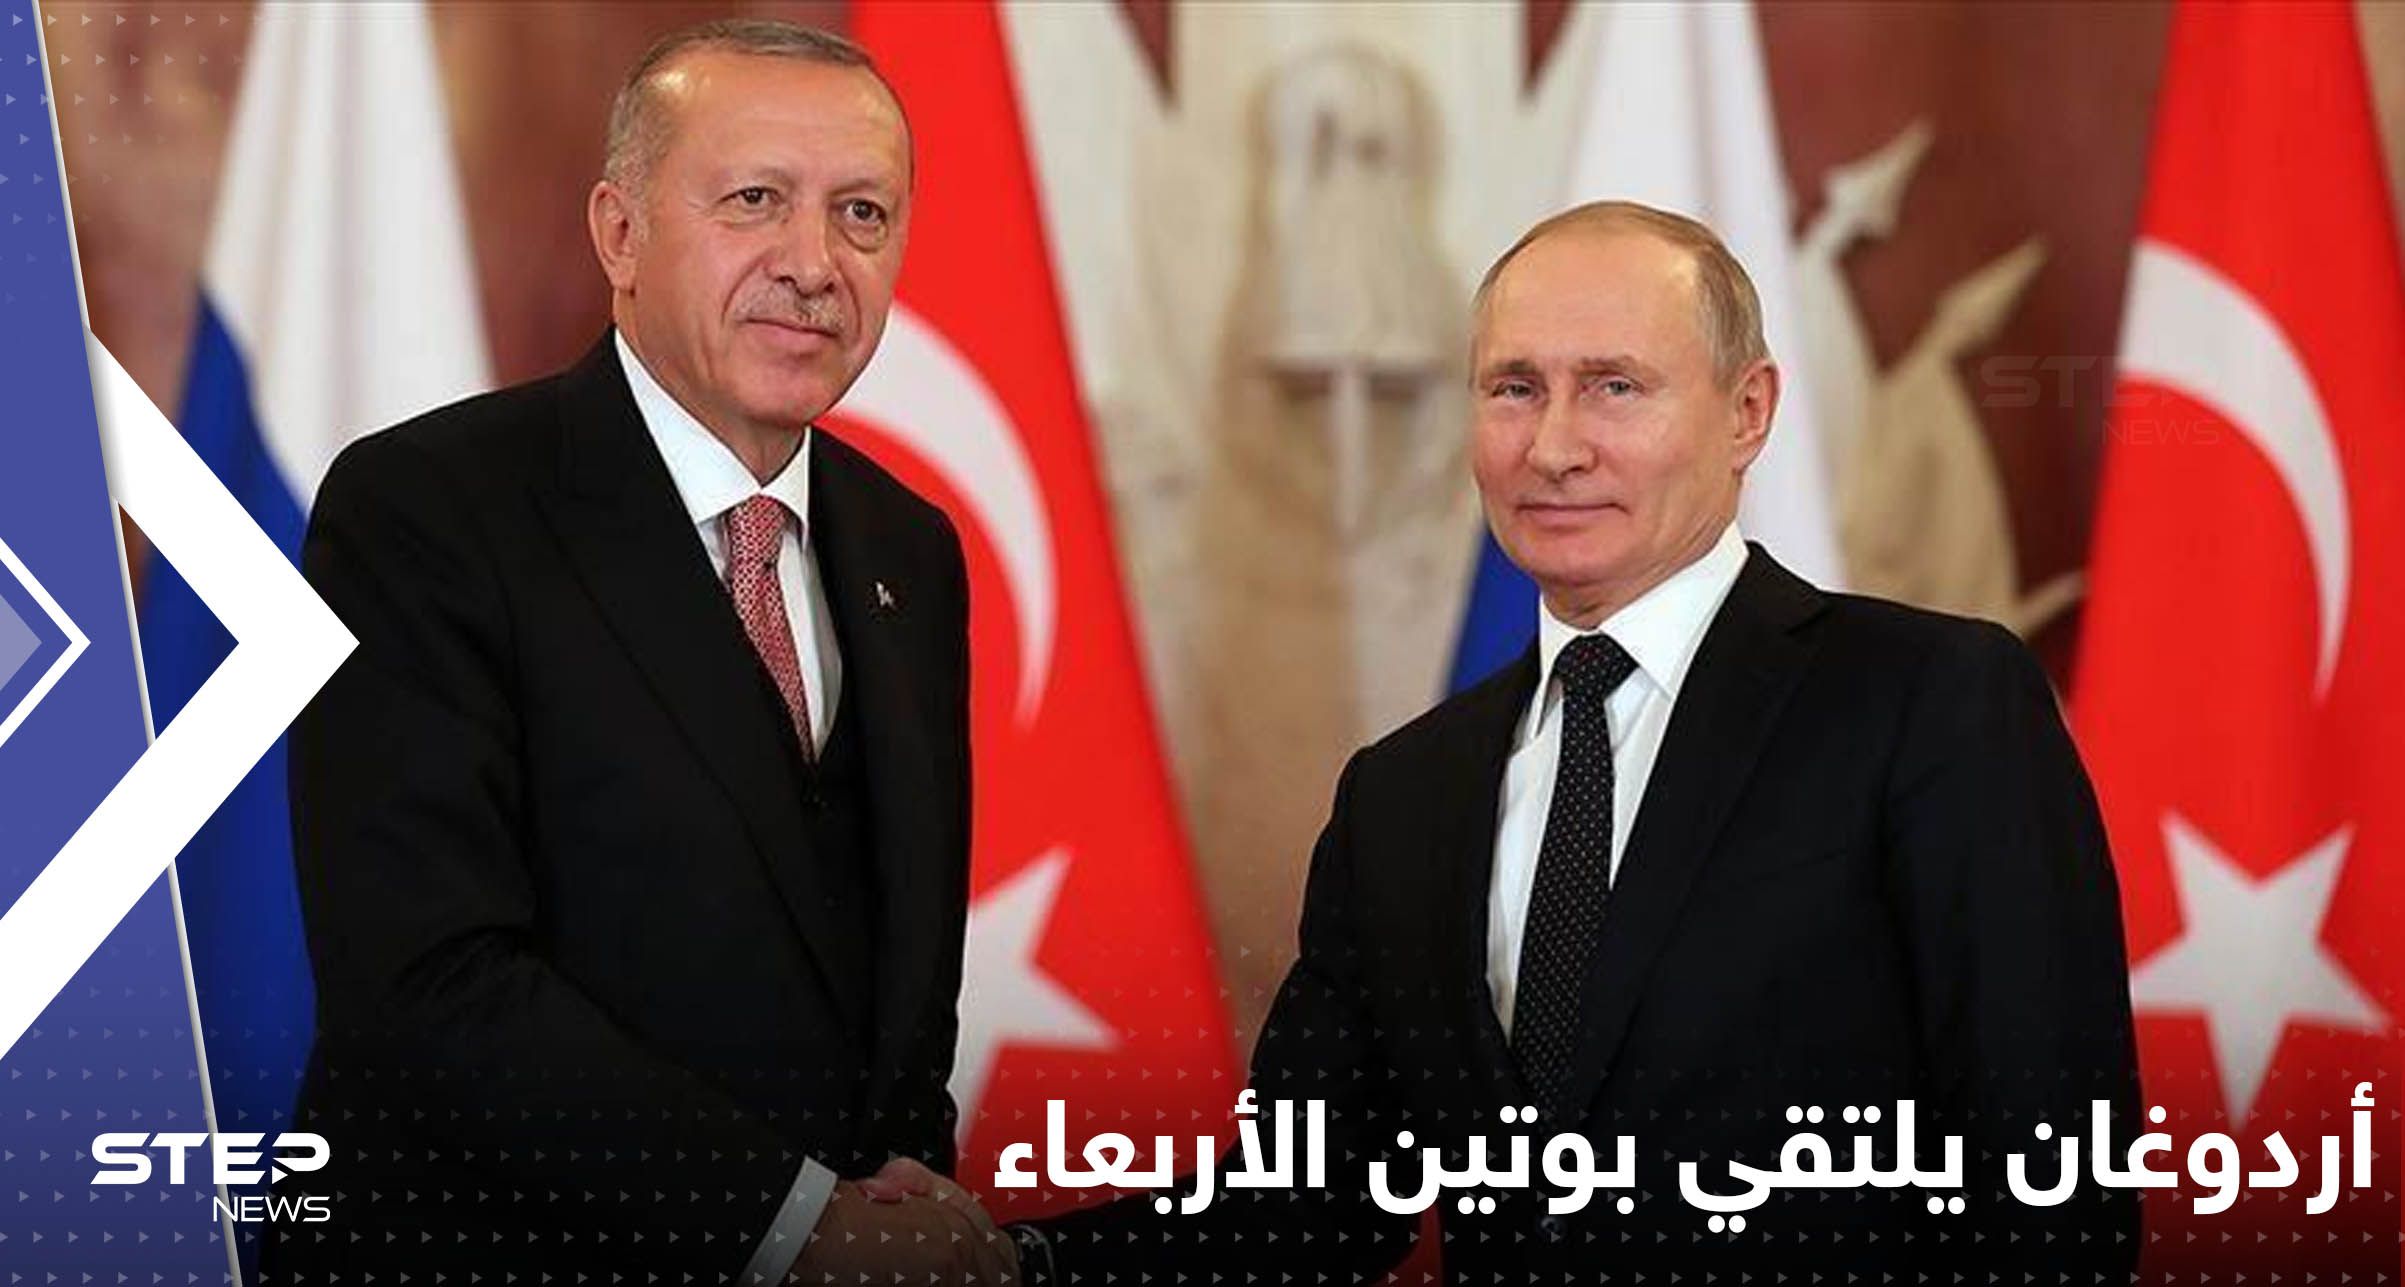 أردوغان سيلتقي بوتين قريباً.. مسؤول تركي يكشف التفاصيل